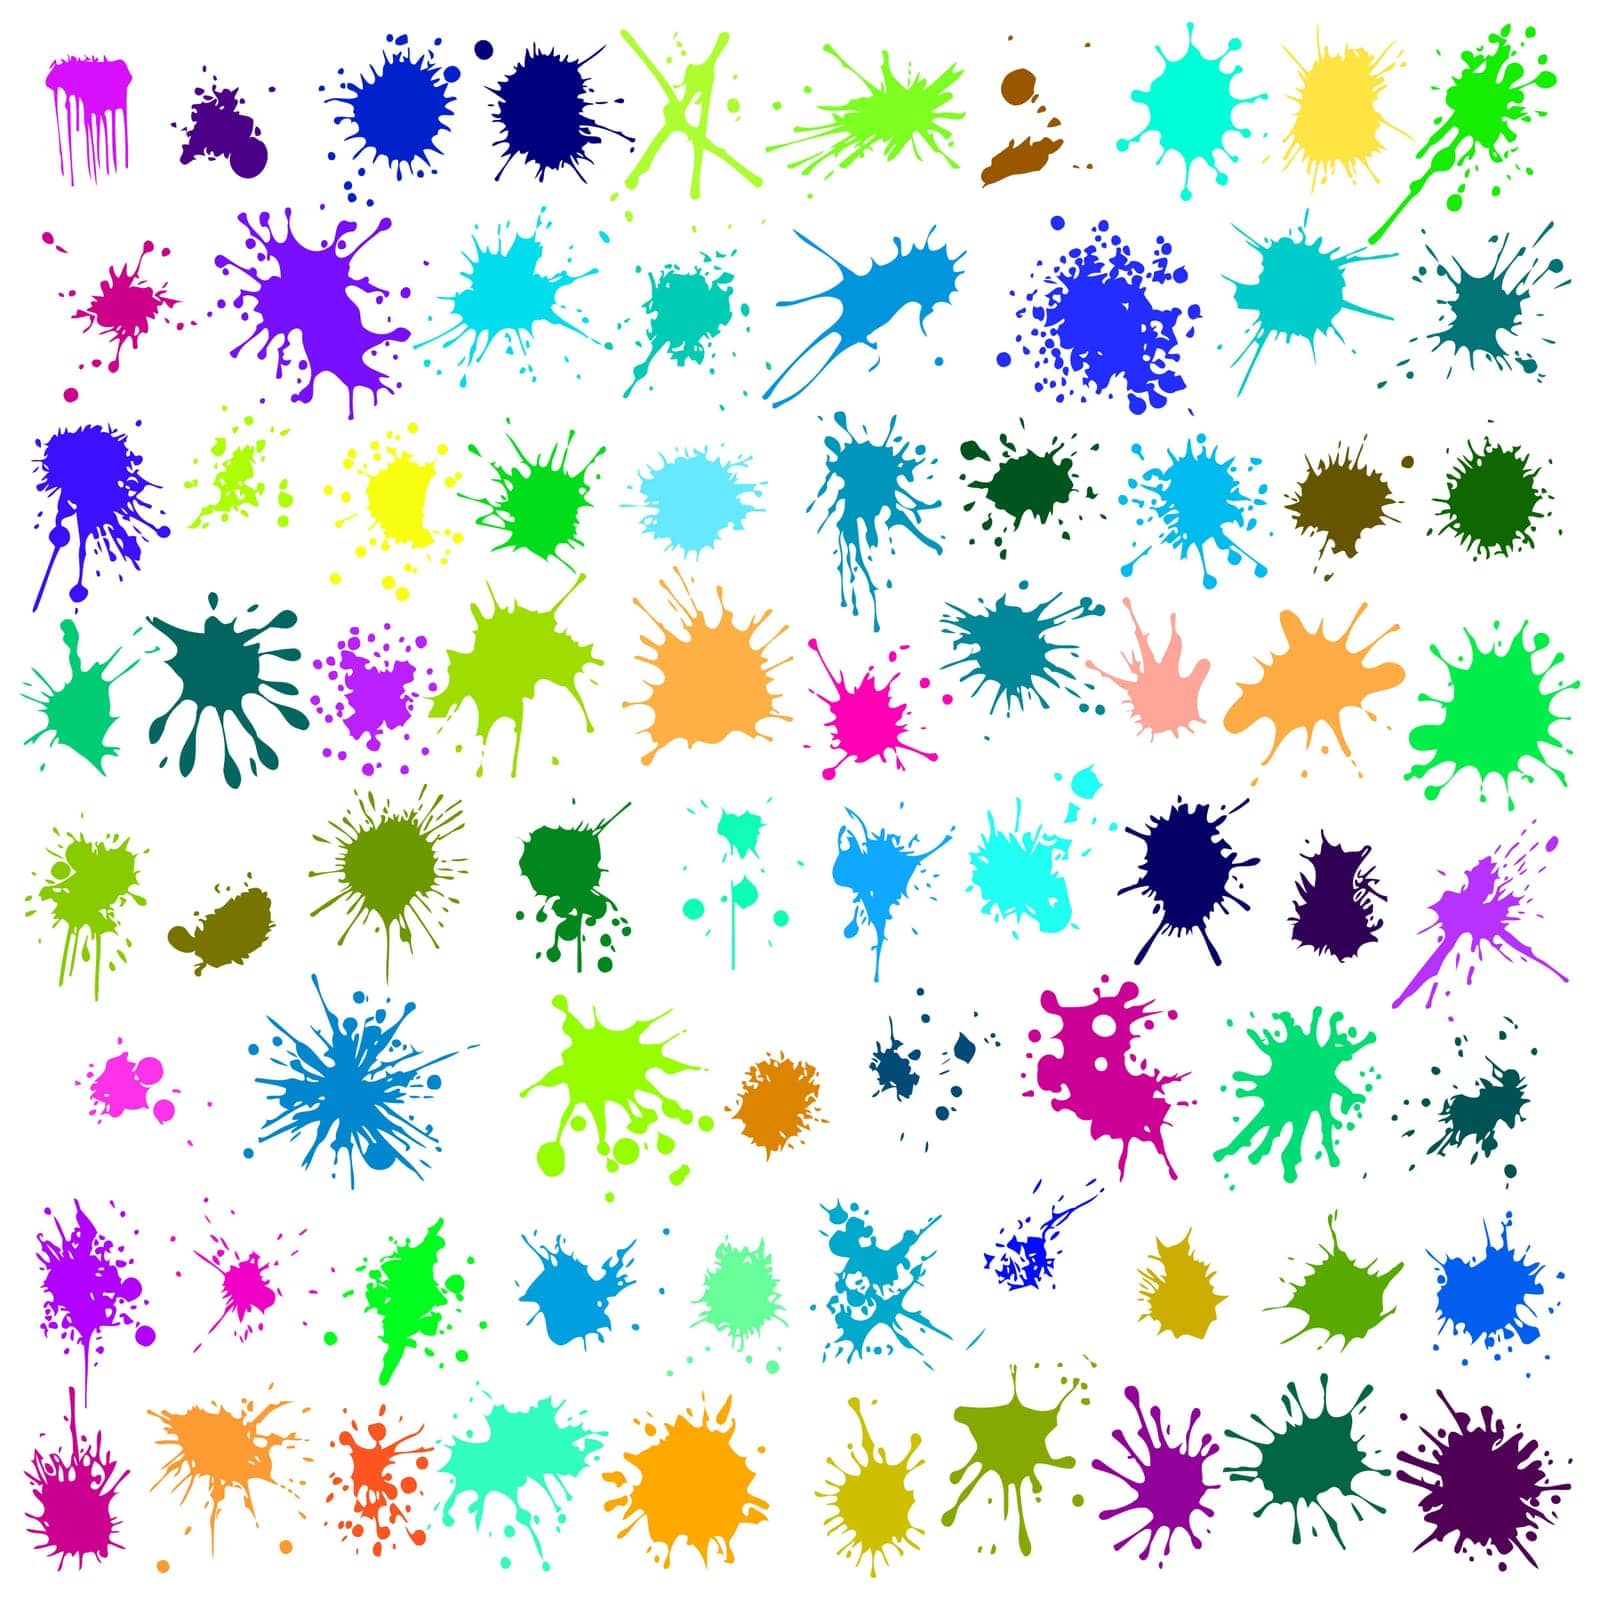 Splashes. Blotter spots. Colored liquid paint splash or ink splatter by Chekman